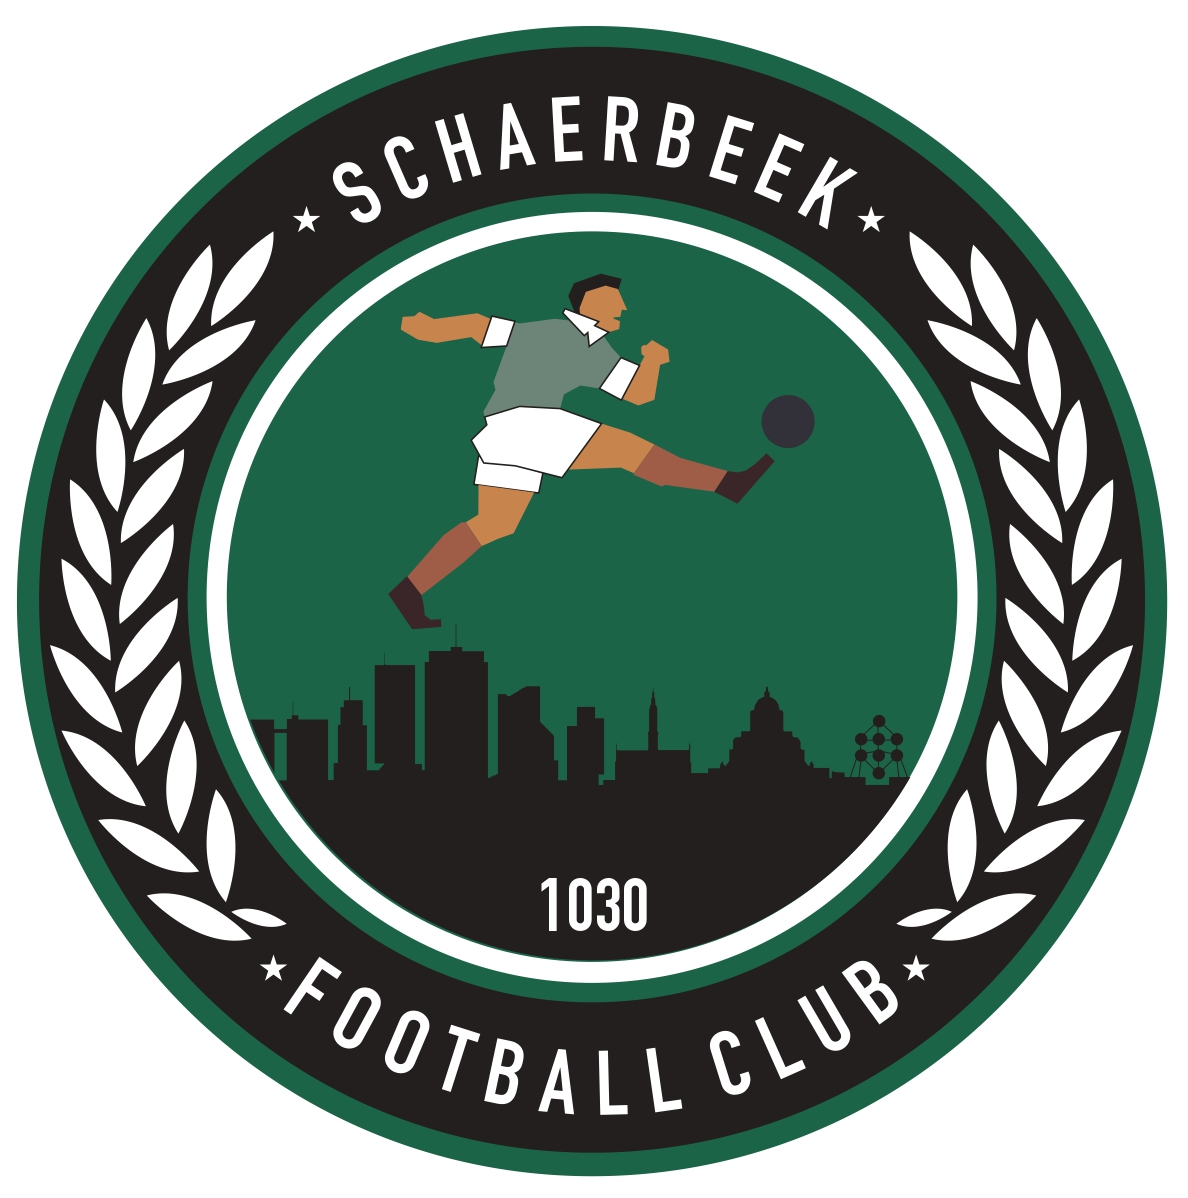 1 - Football Club Schaerbeek B